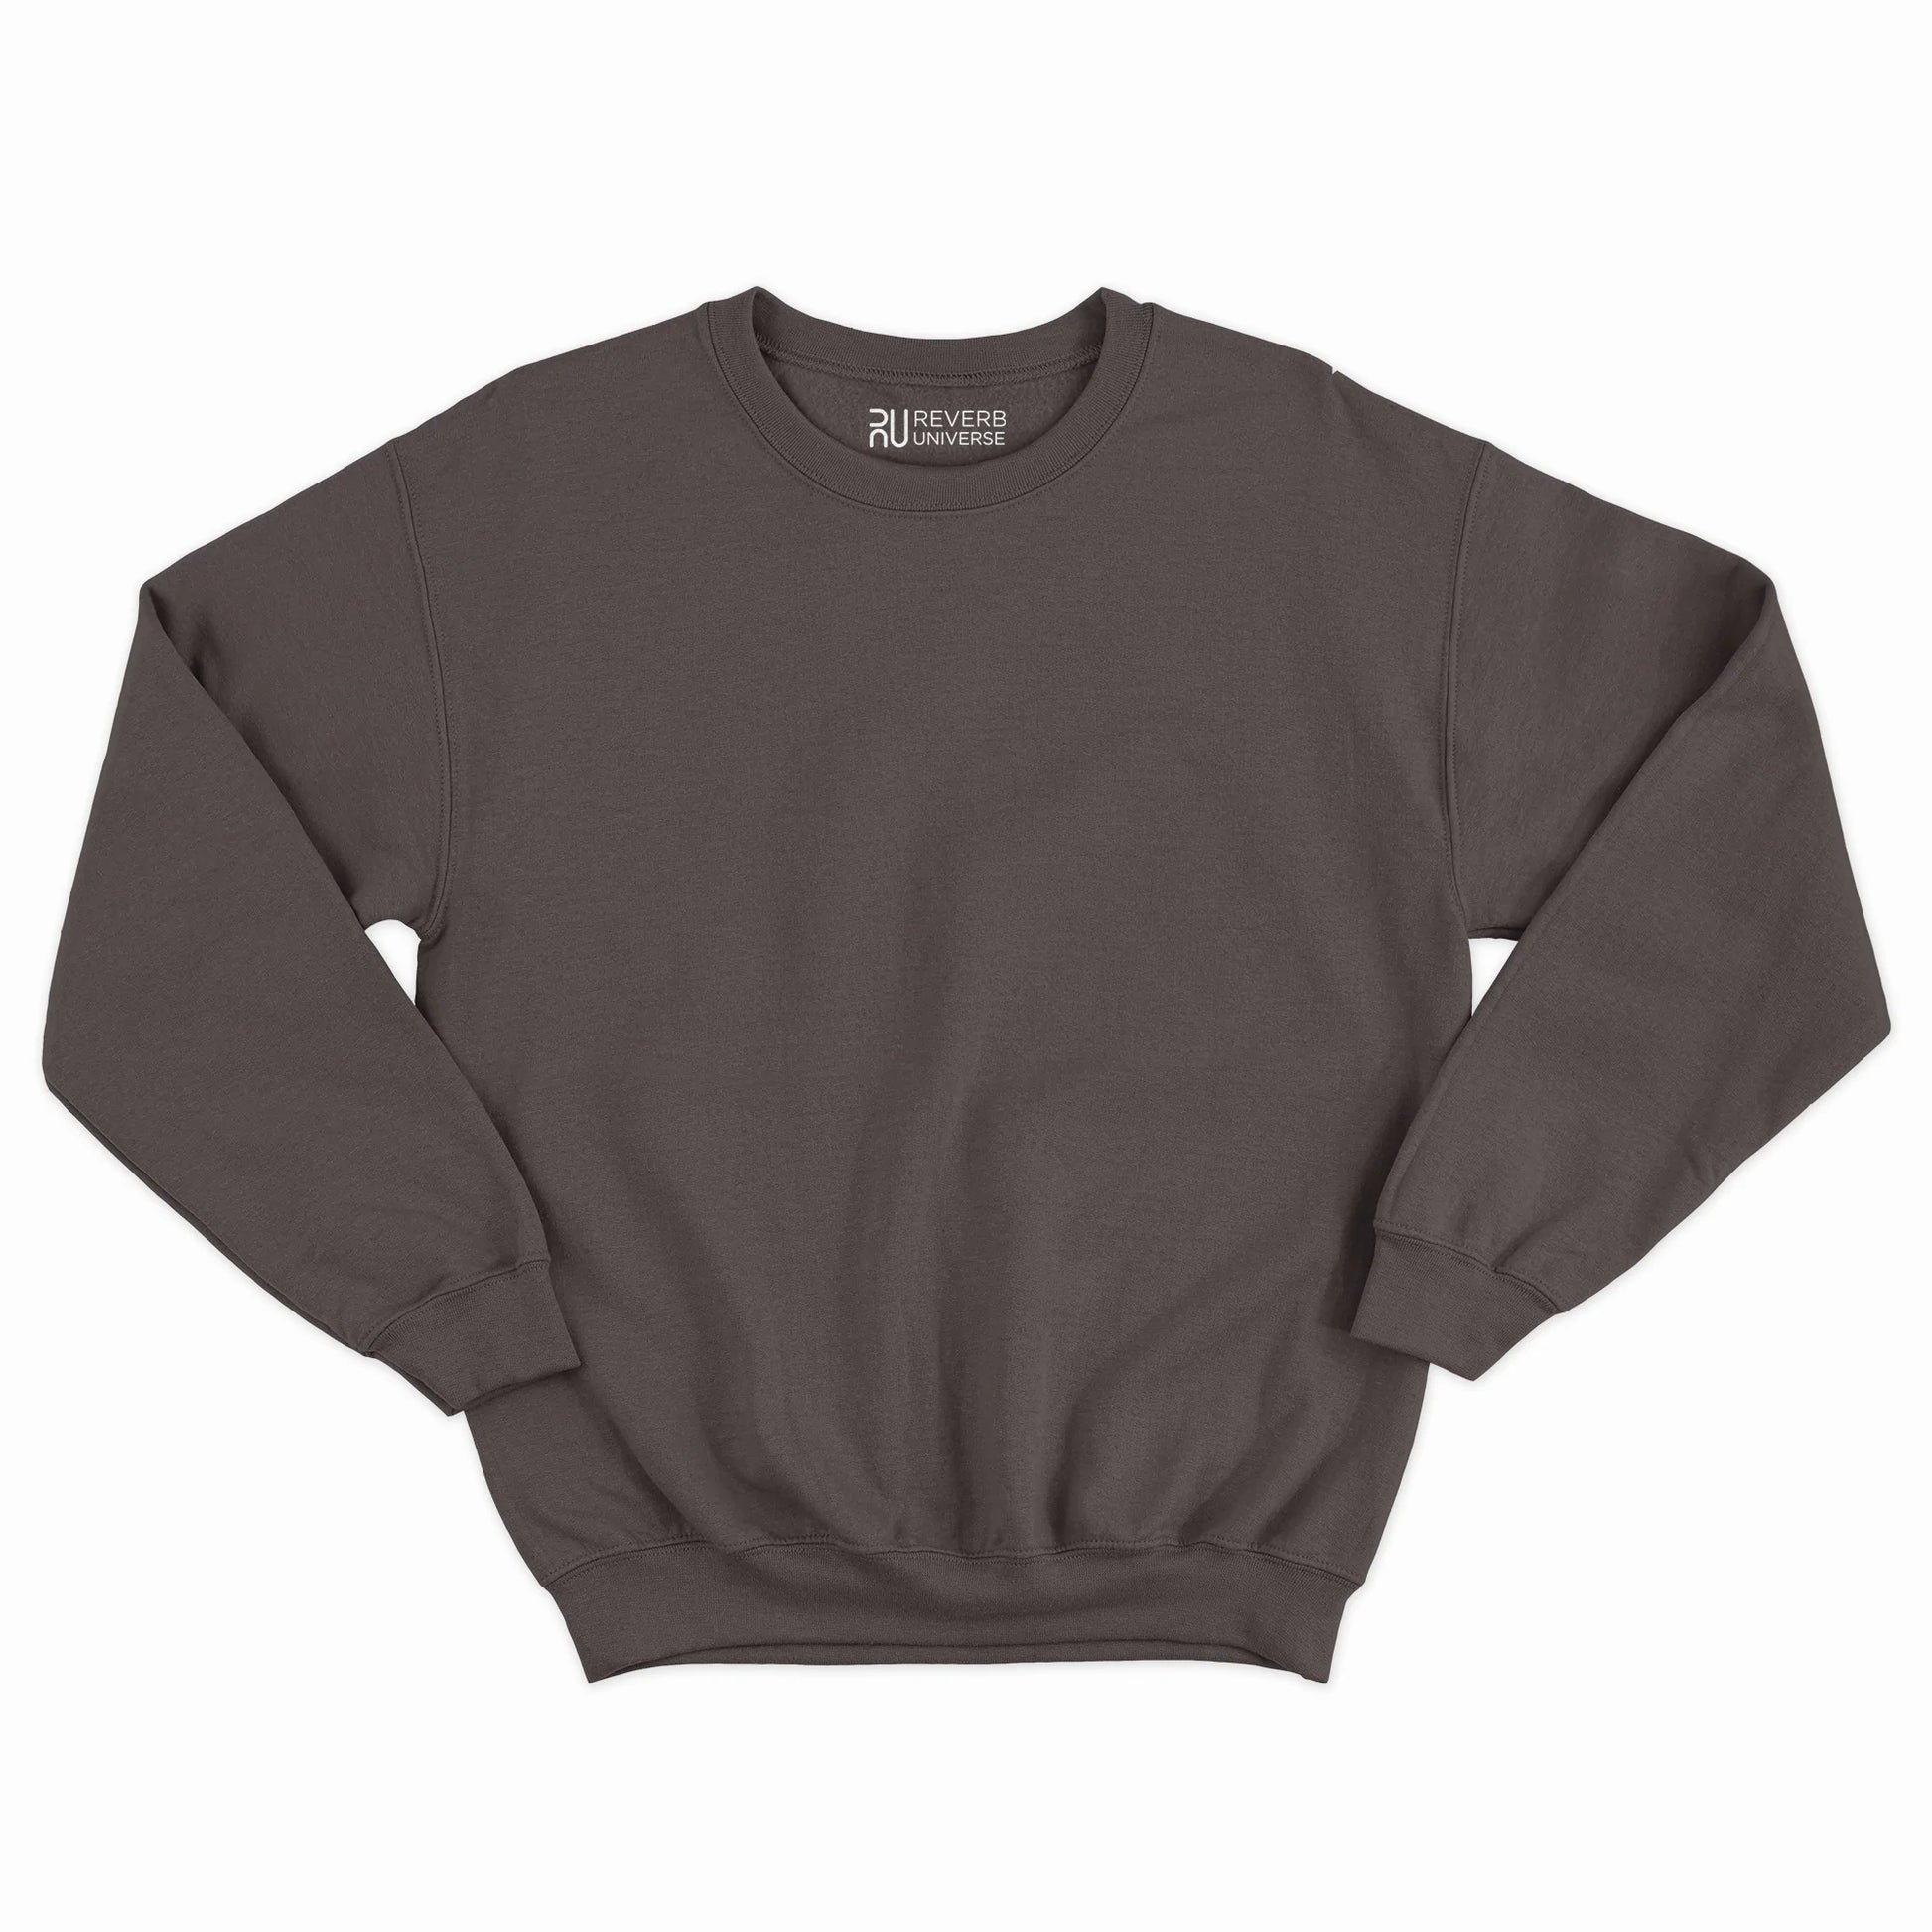 Men's Basic Dark Brown Sweatshirt